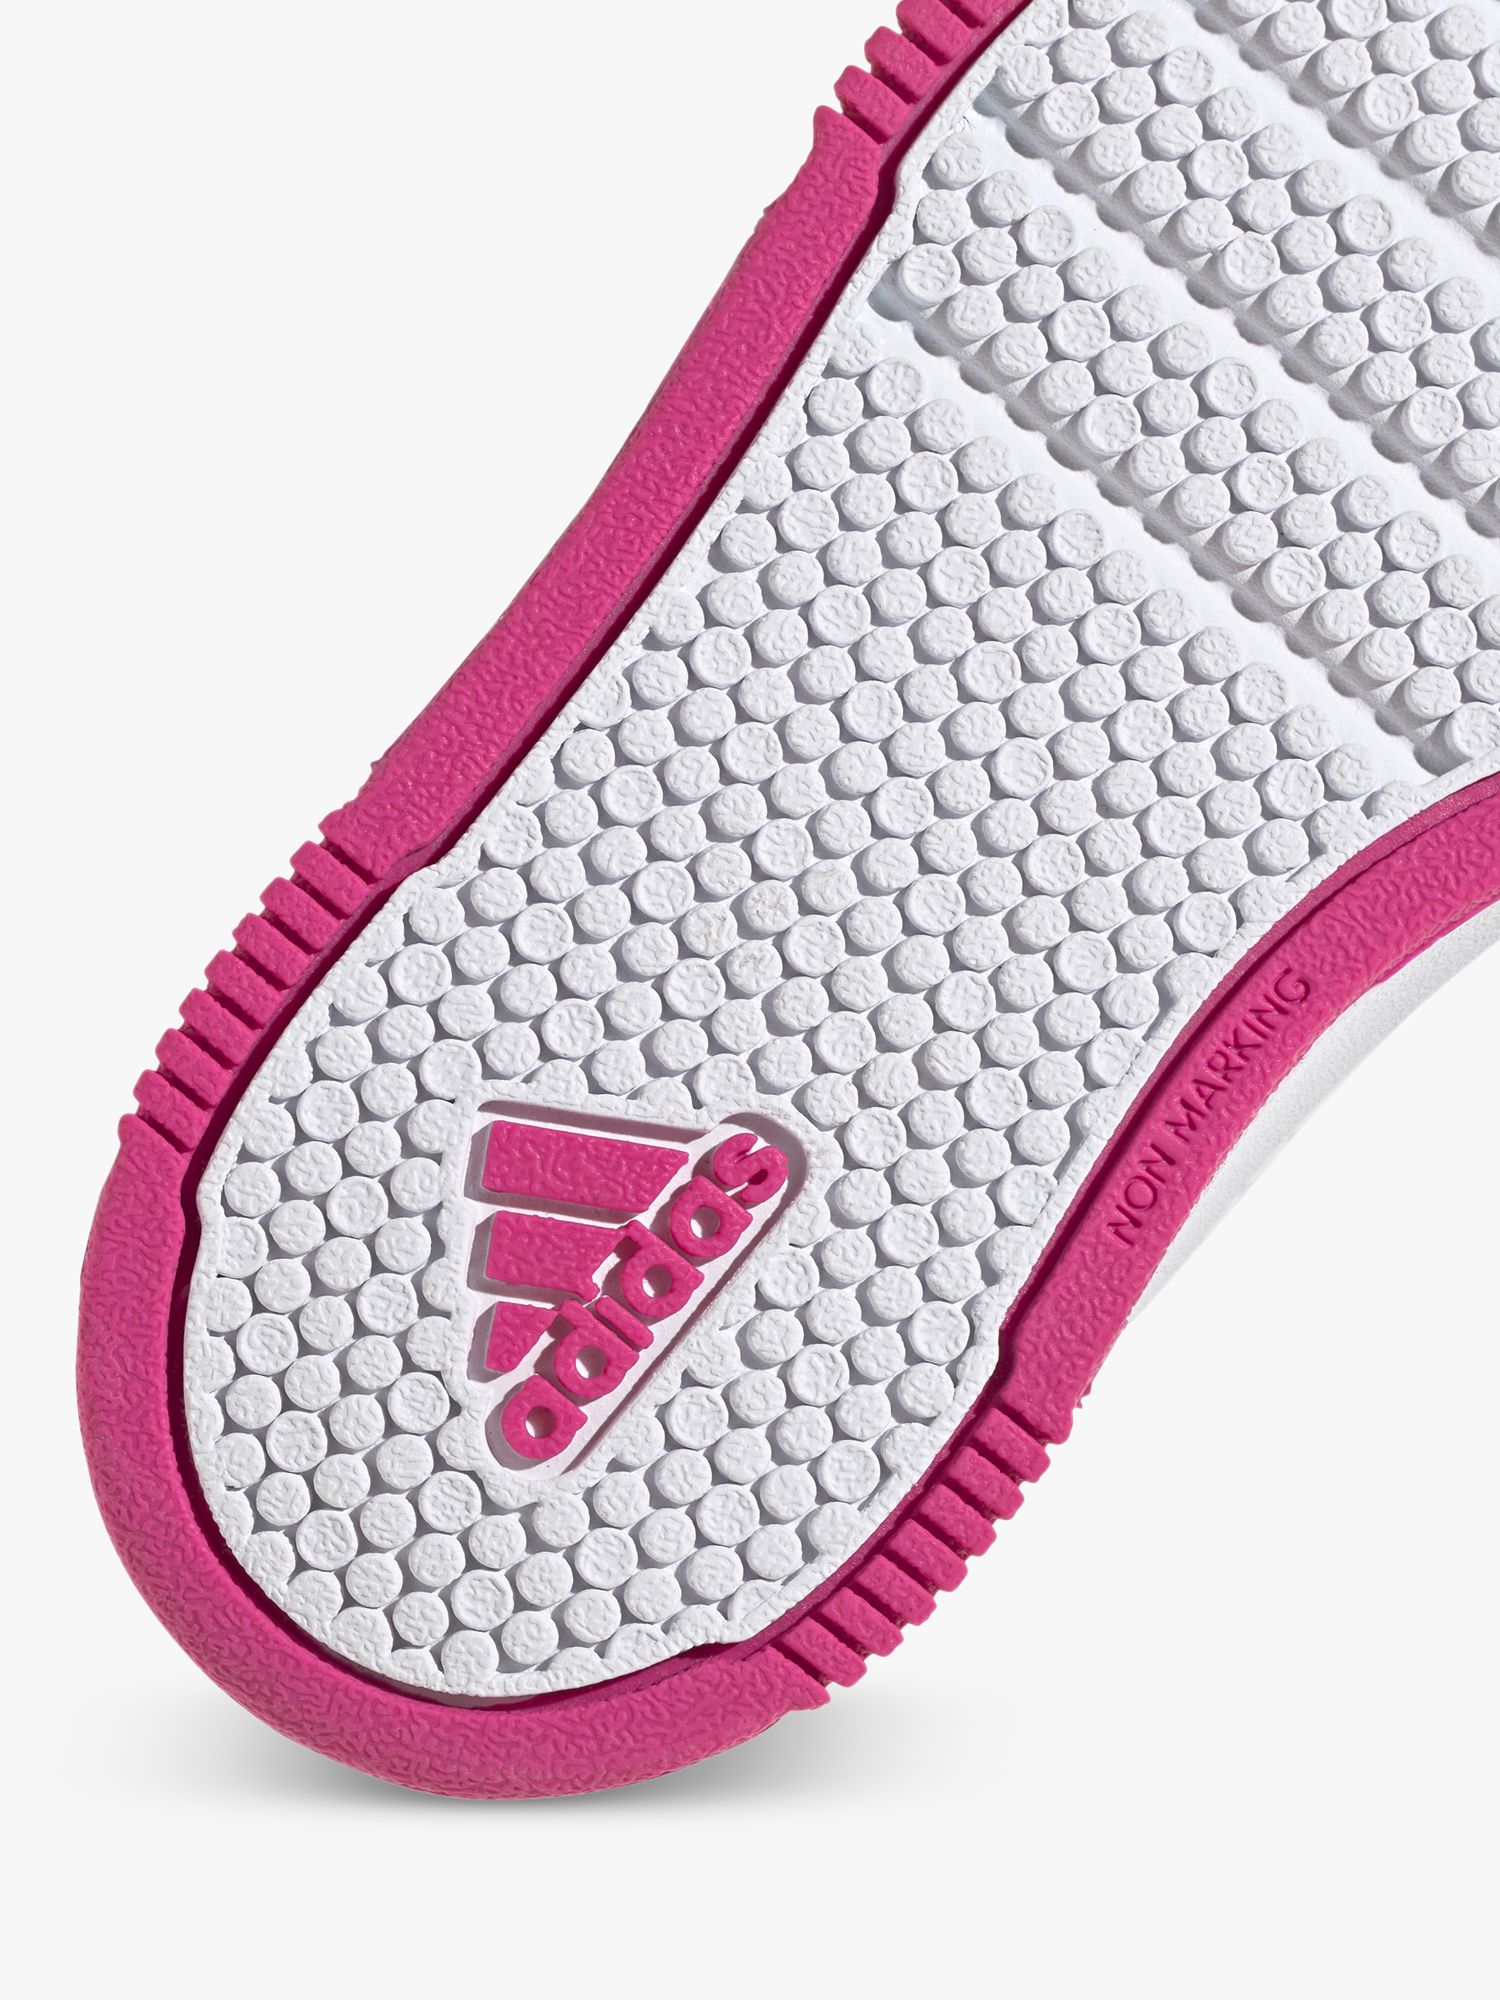 adidas Kids' Tensaur Sport Riptape Running Shoes, Cloud White/Team Real Magenta/Core Black, 10 Jnr